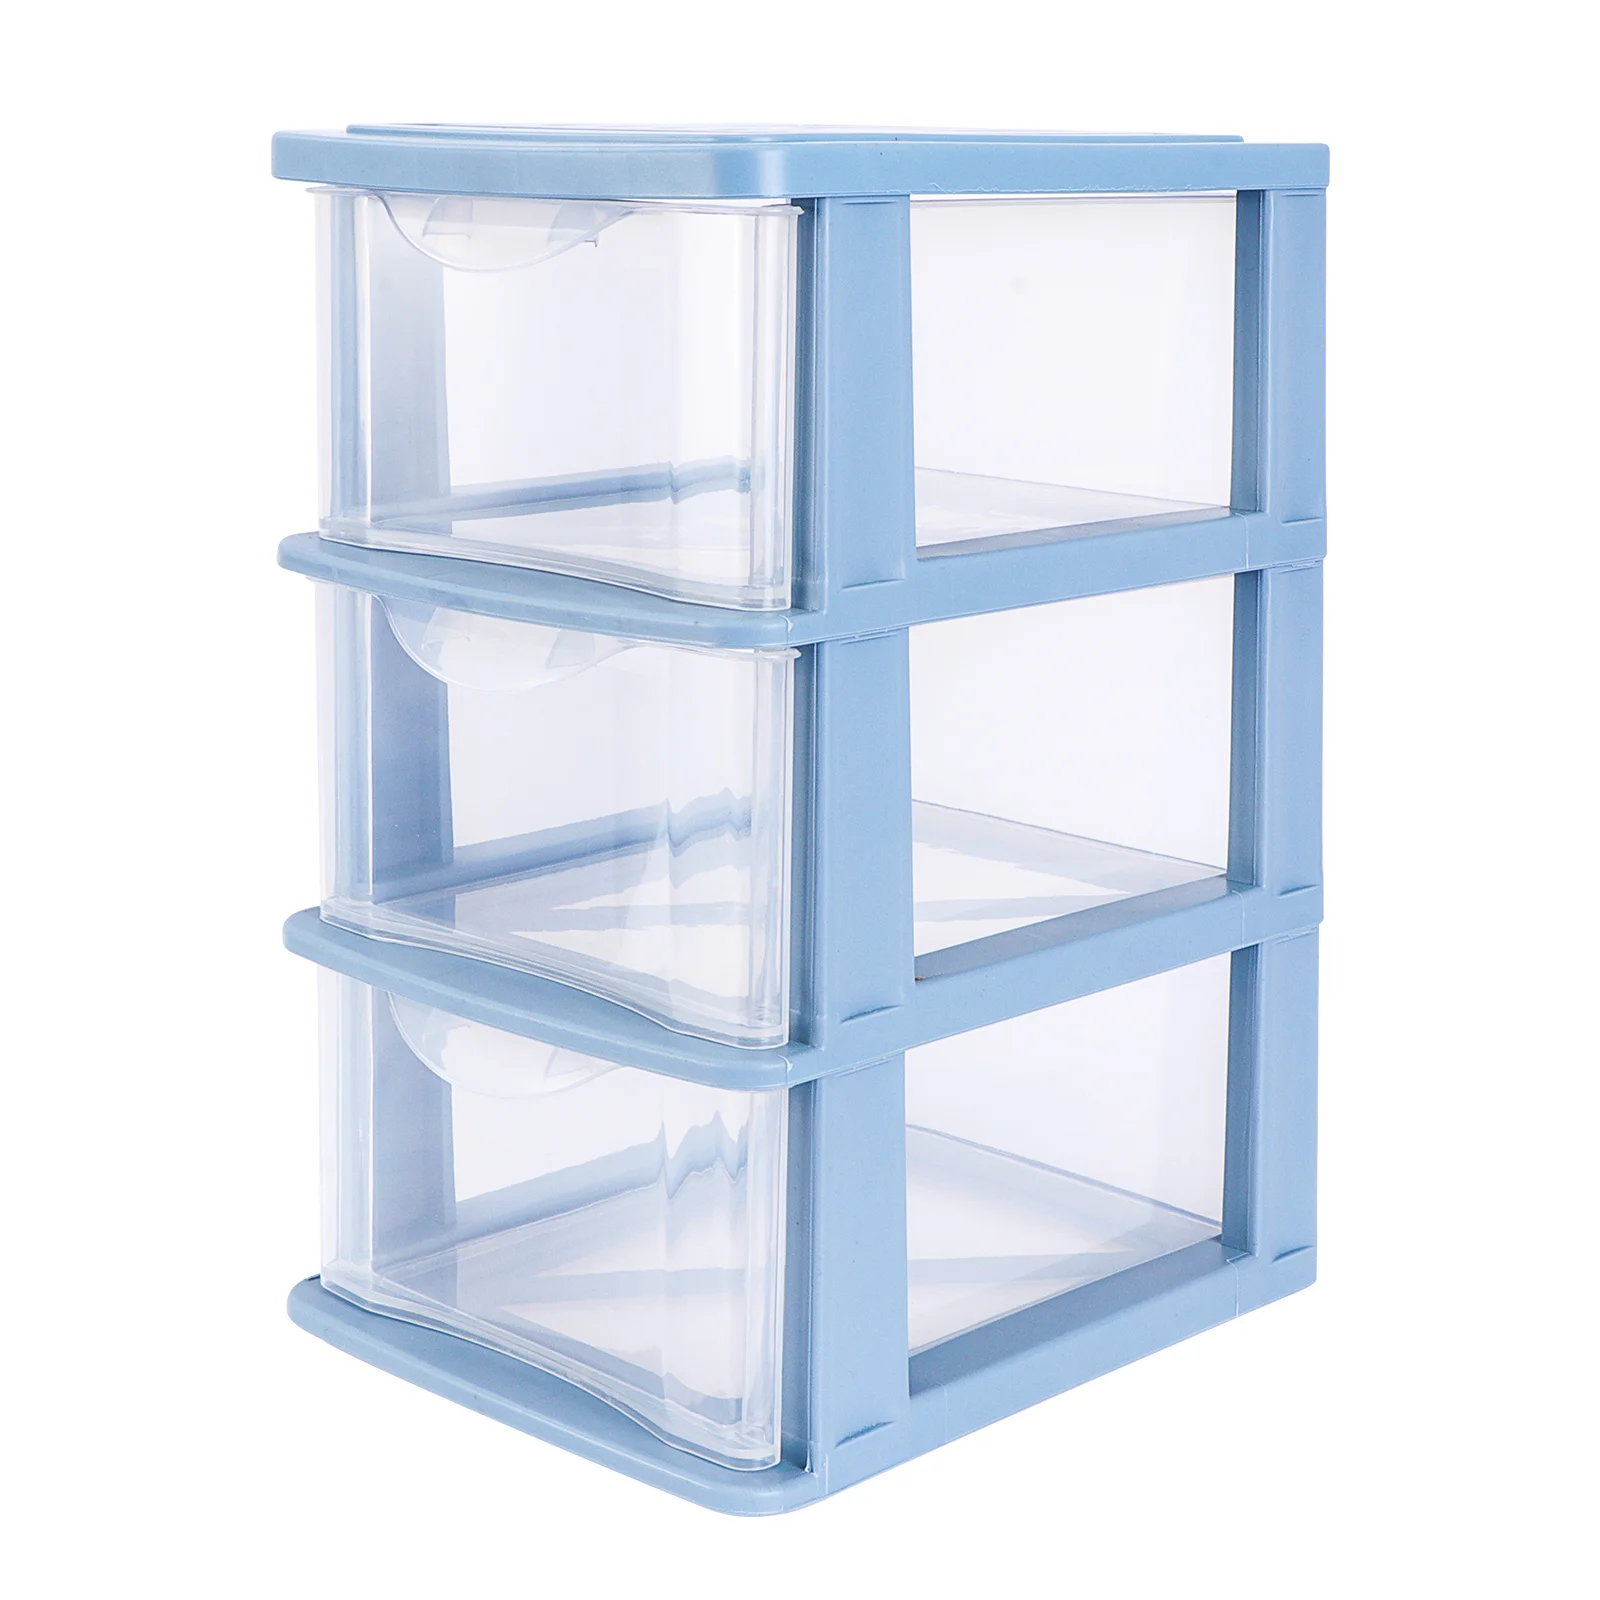 

Storage Box Ring Organizer Desktop Case Makeup Sundries Drawer Organizing Holder Plastic Pp Tabletop Container Office